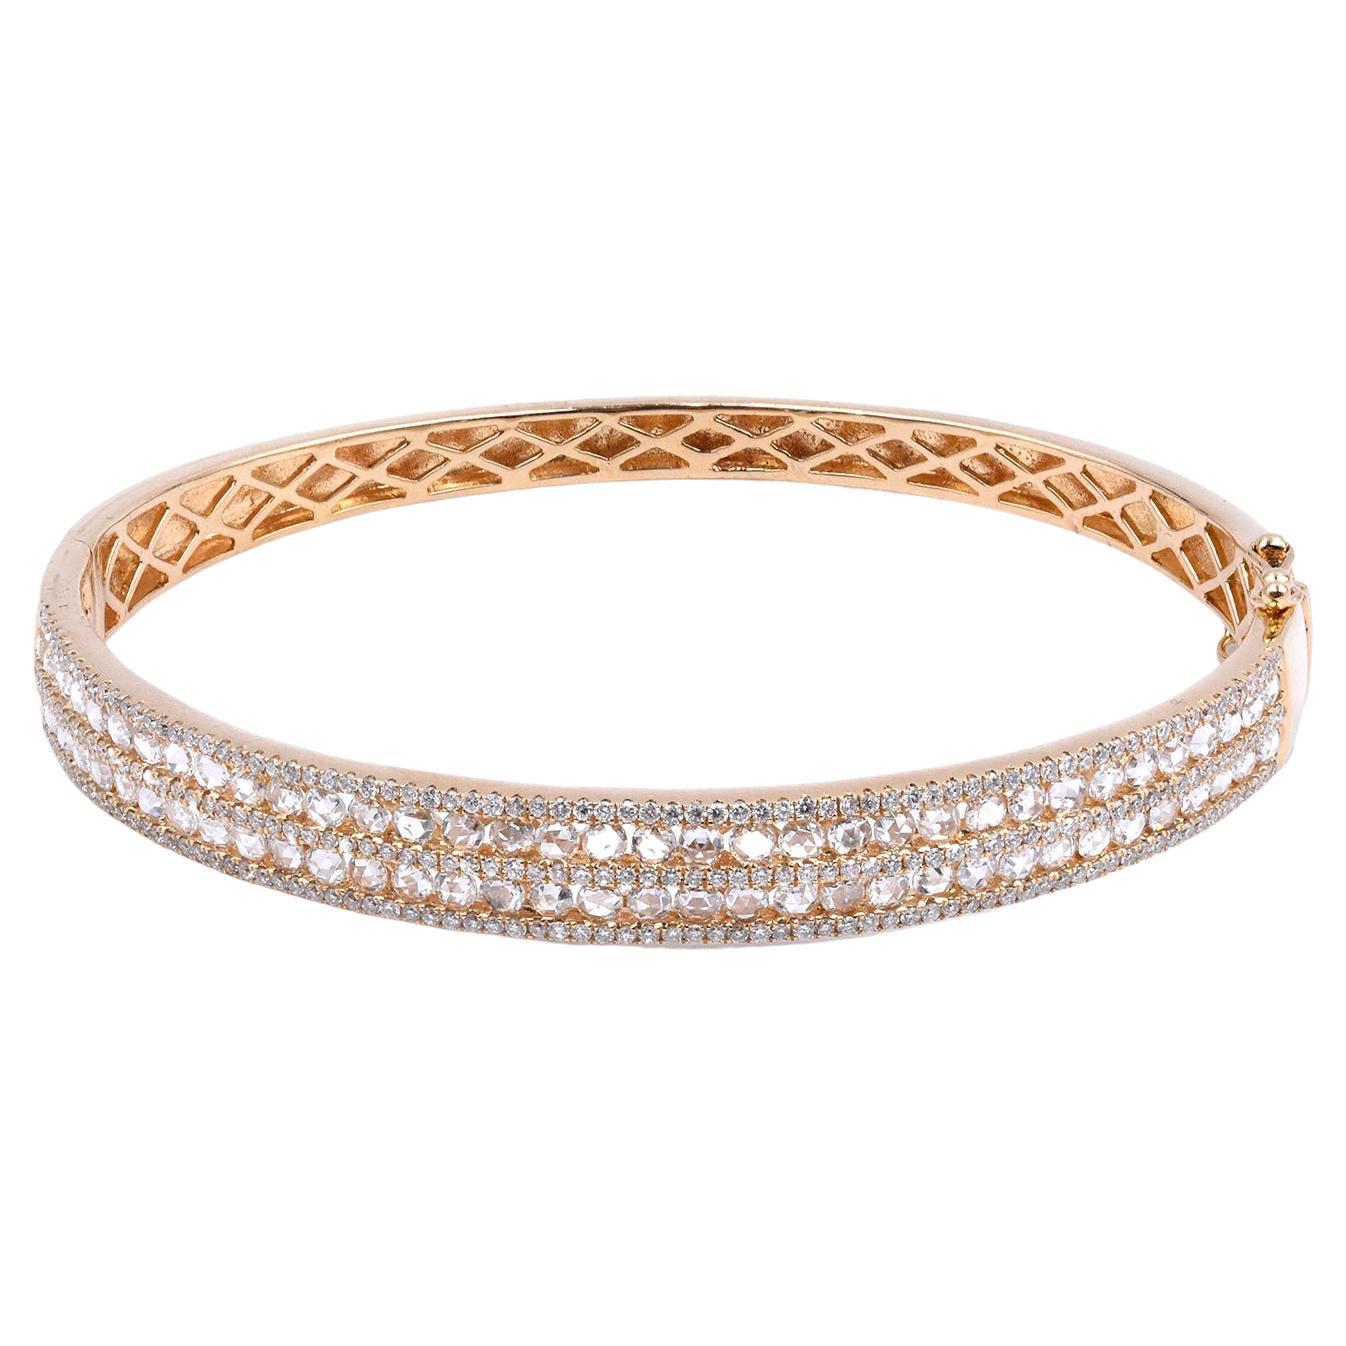 18 Karat Yellow Gold Five-Row Diamond Bangle Bracelet